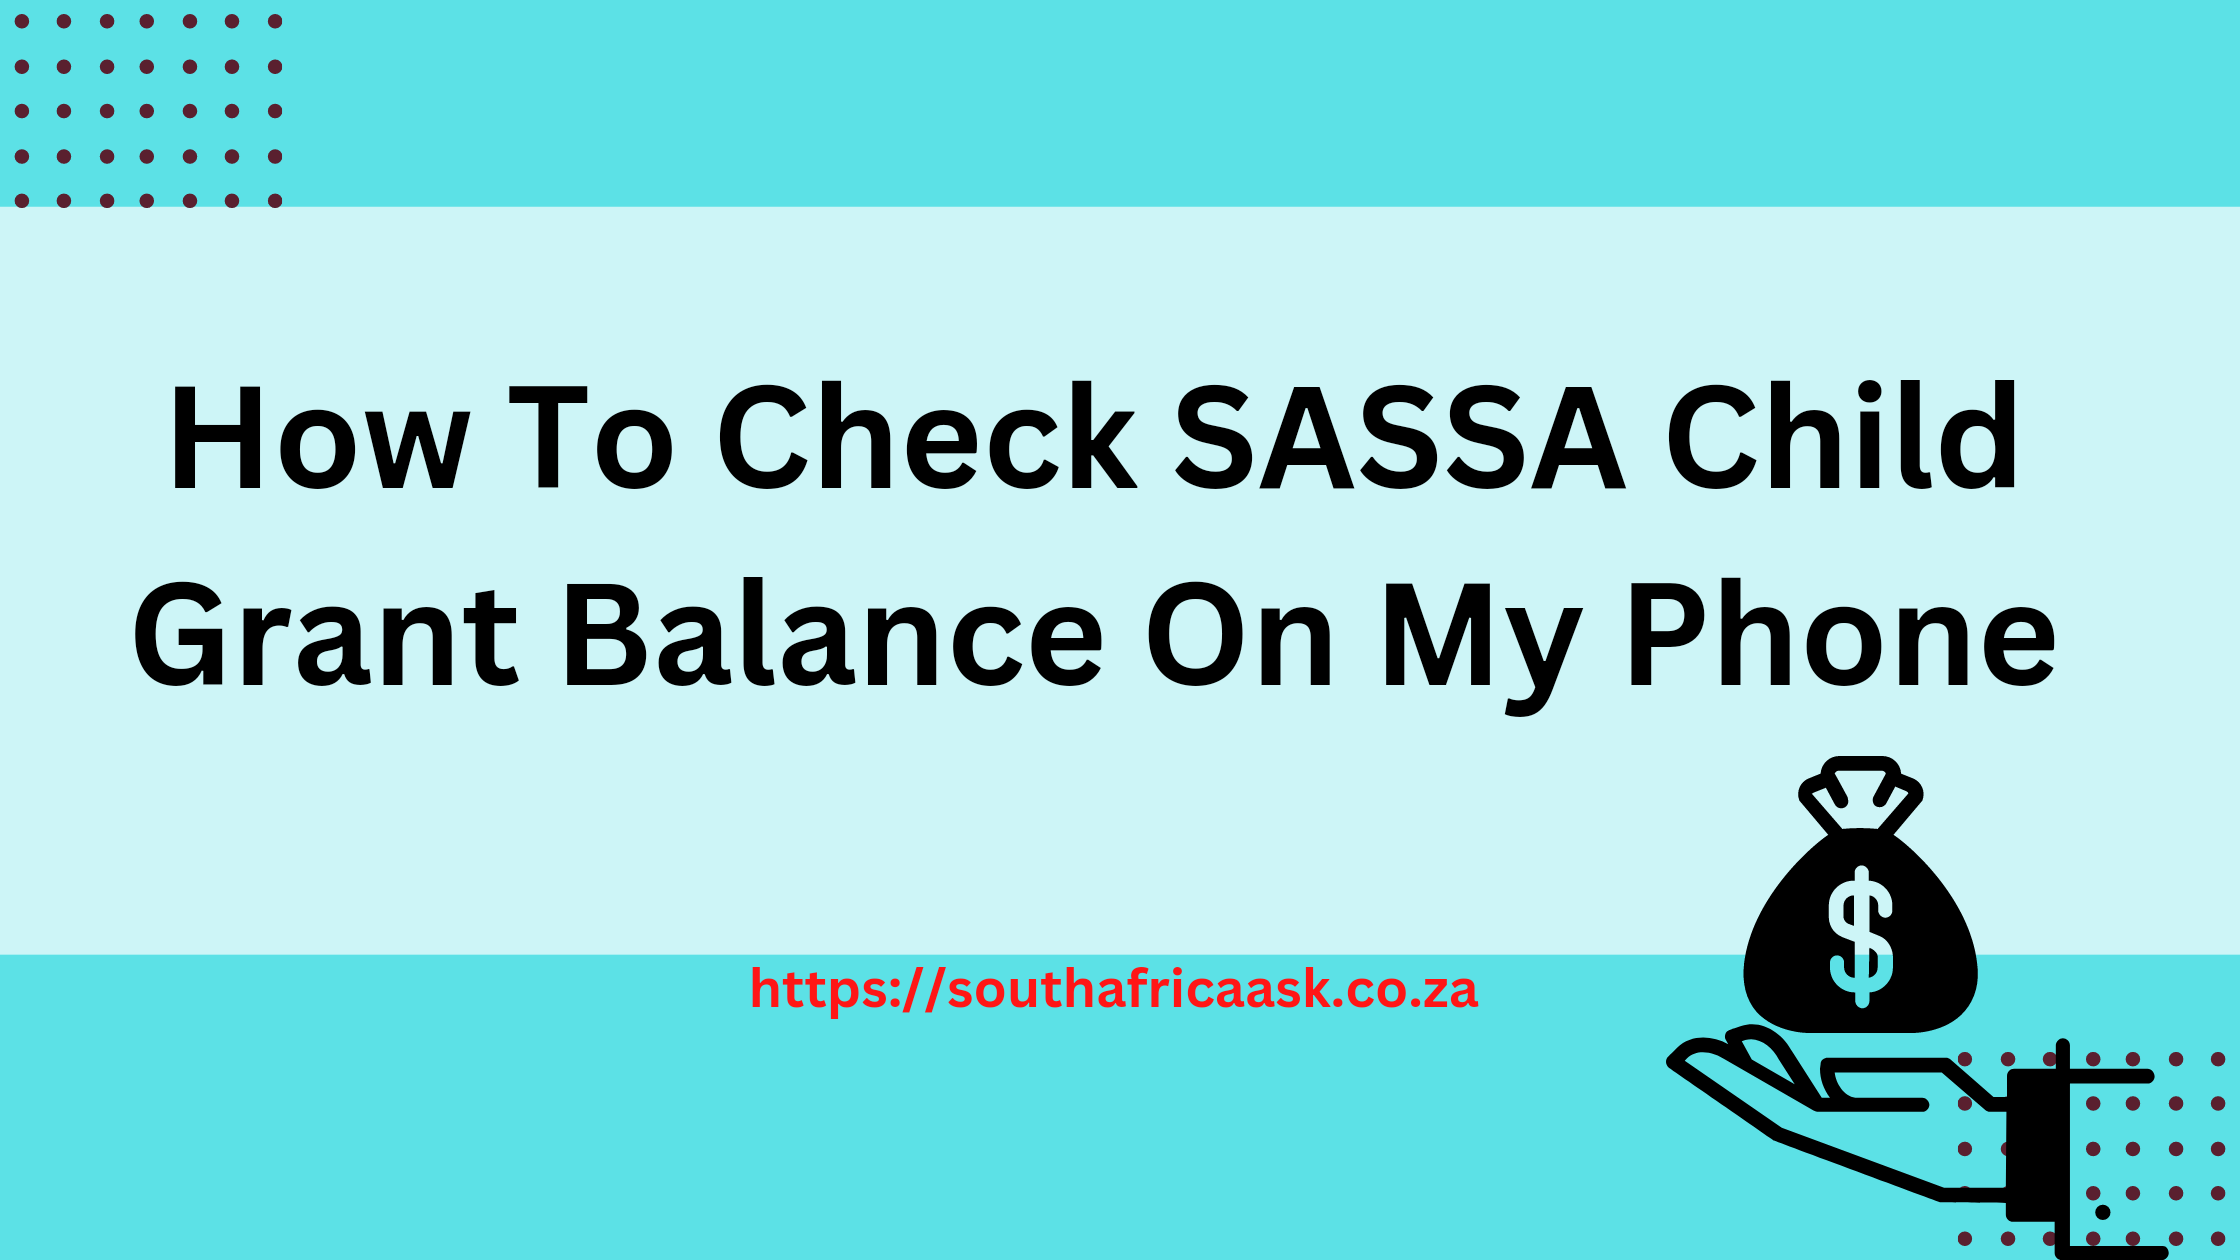 How To Check SASSA Child Grant Balance On My Phone